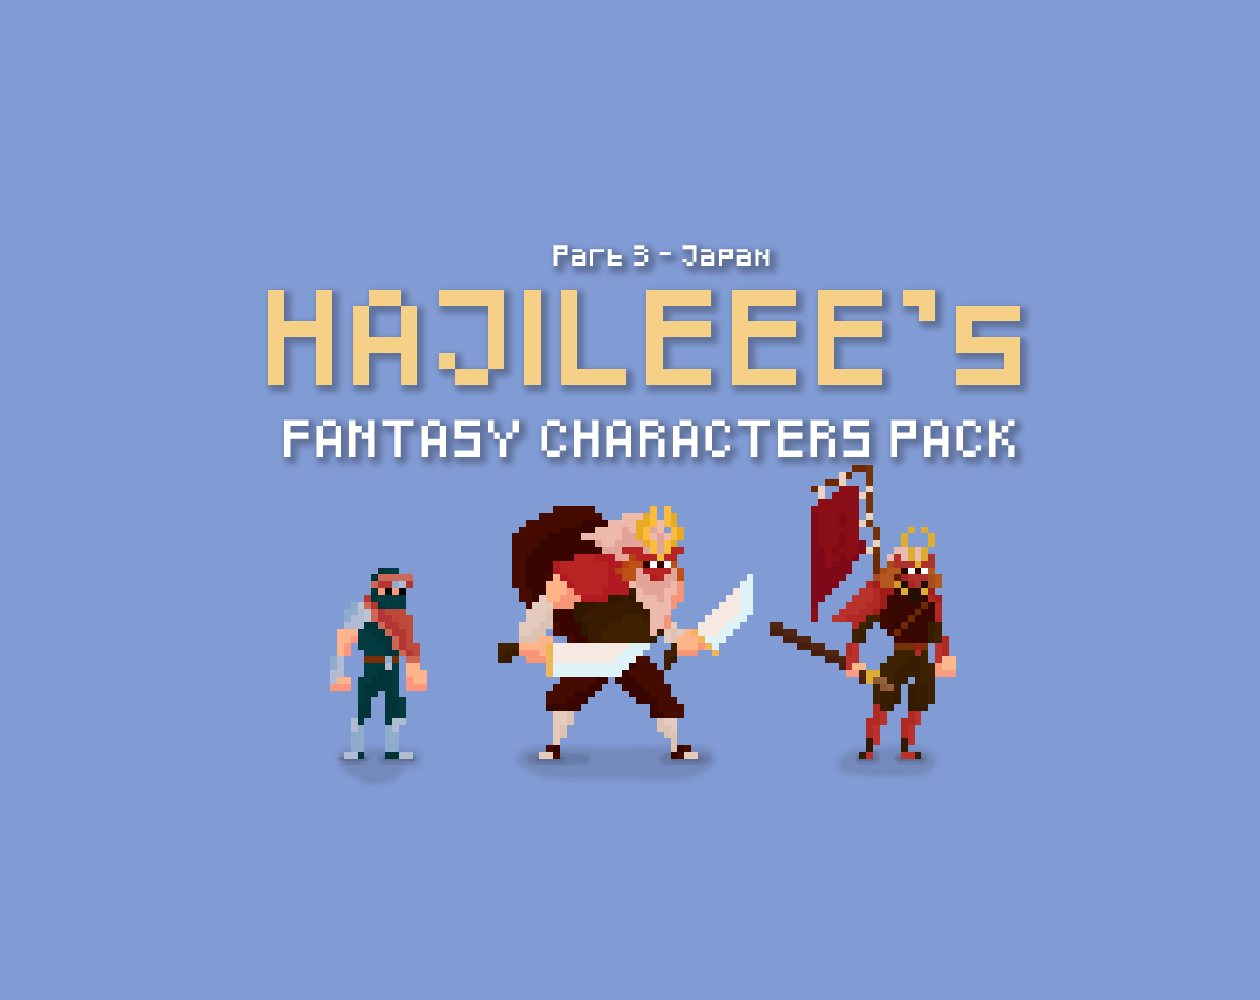 Hajileee's Fantasy Characters Pack - Japan Set